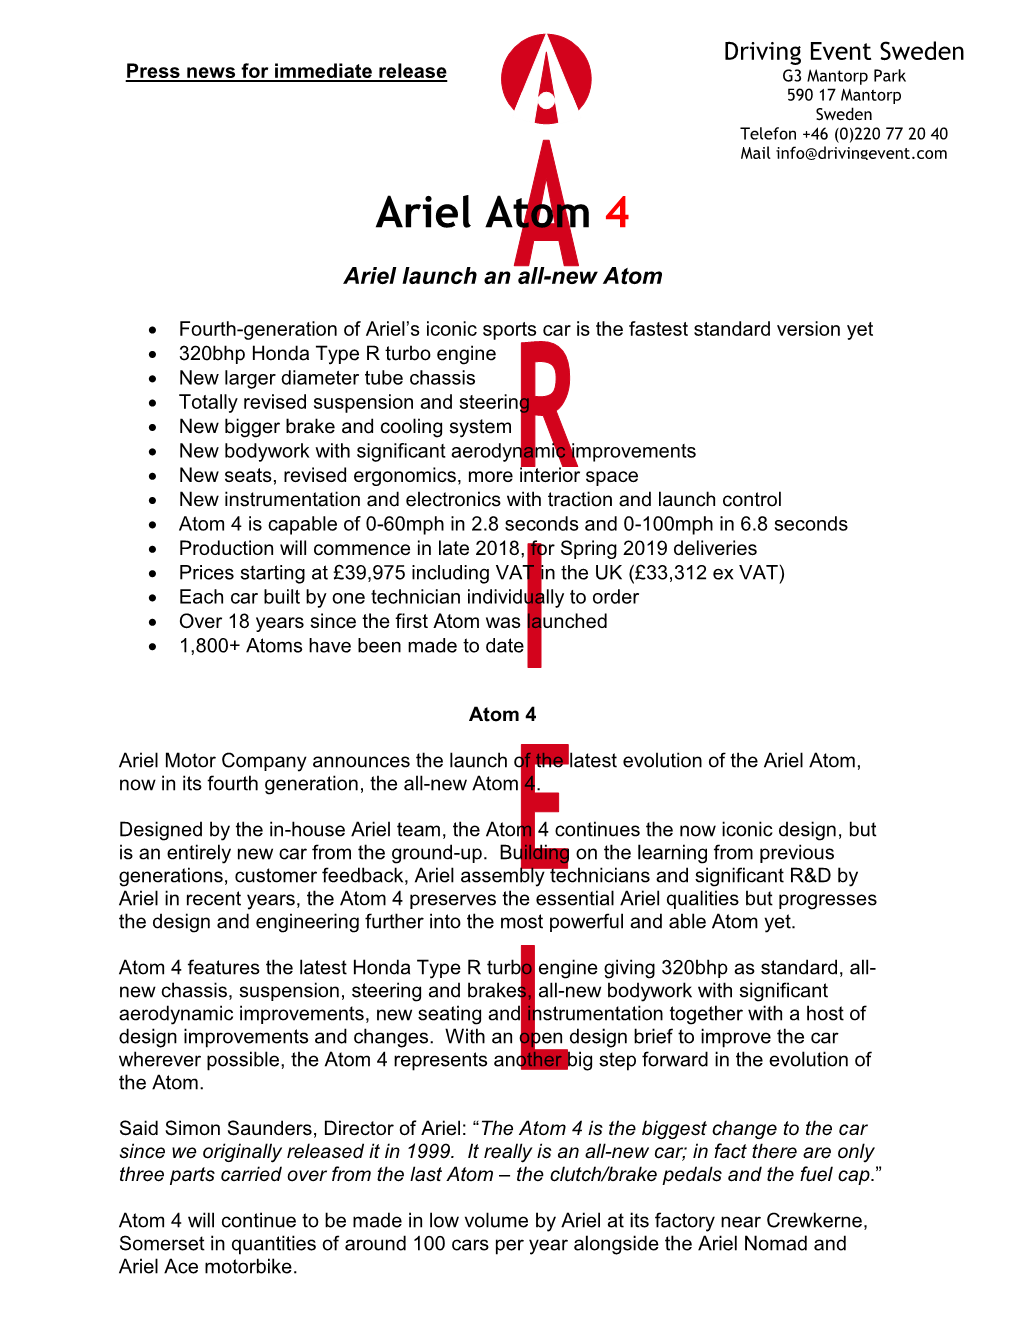 Ariel Atom 4